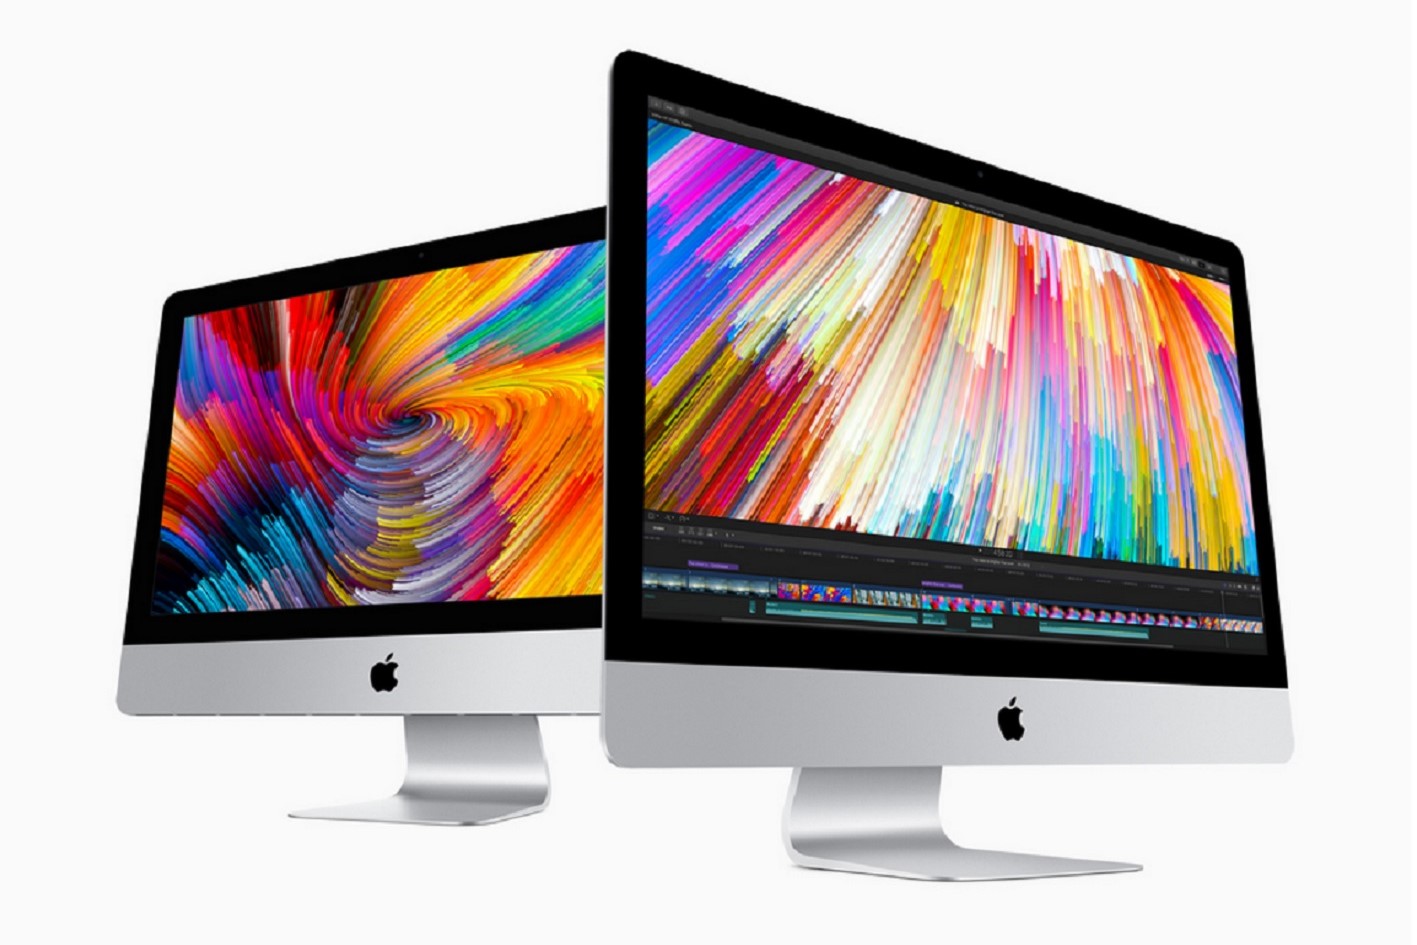 Apple Newsroom Press Photo of iMac